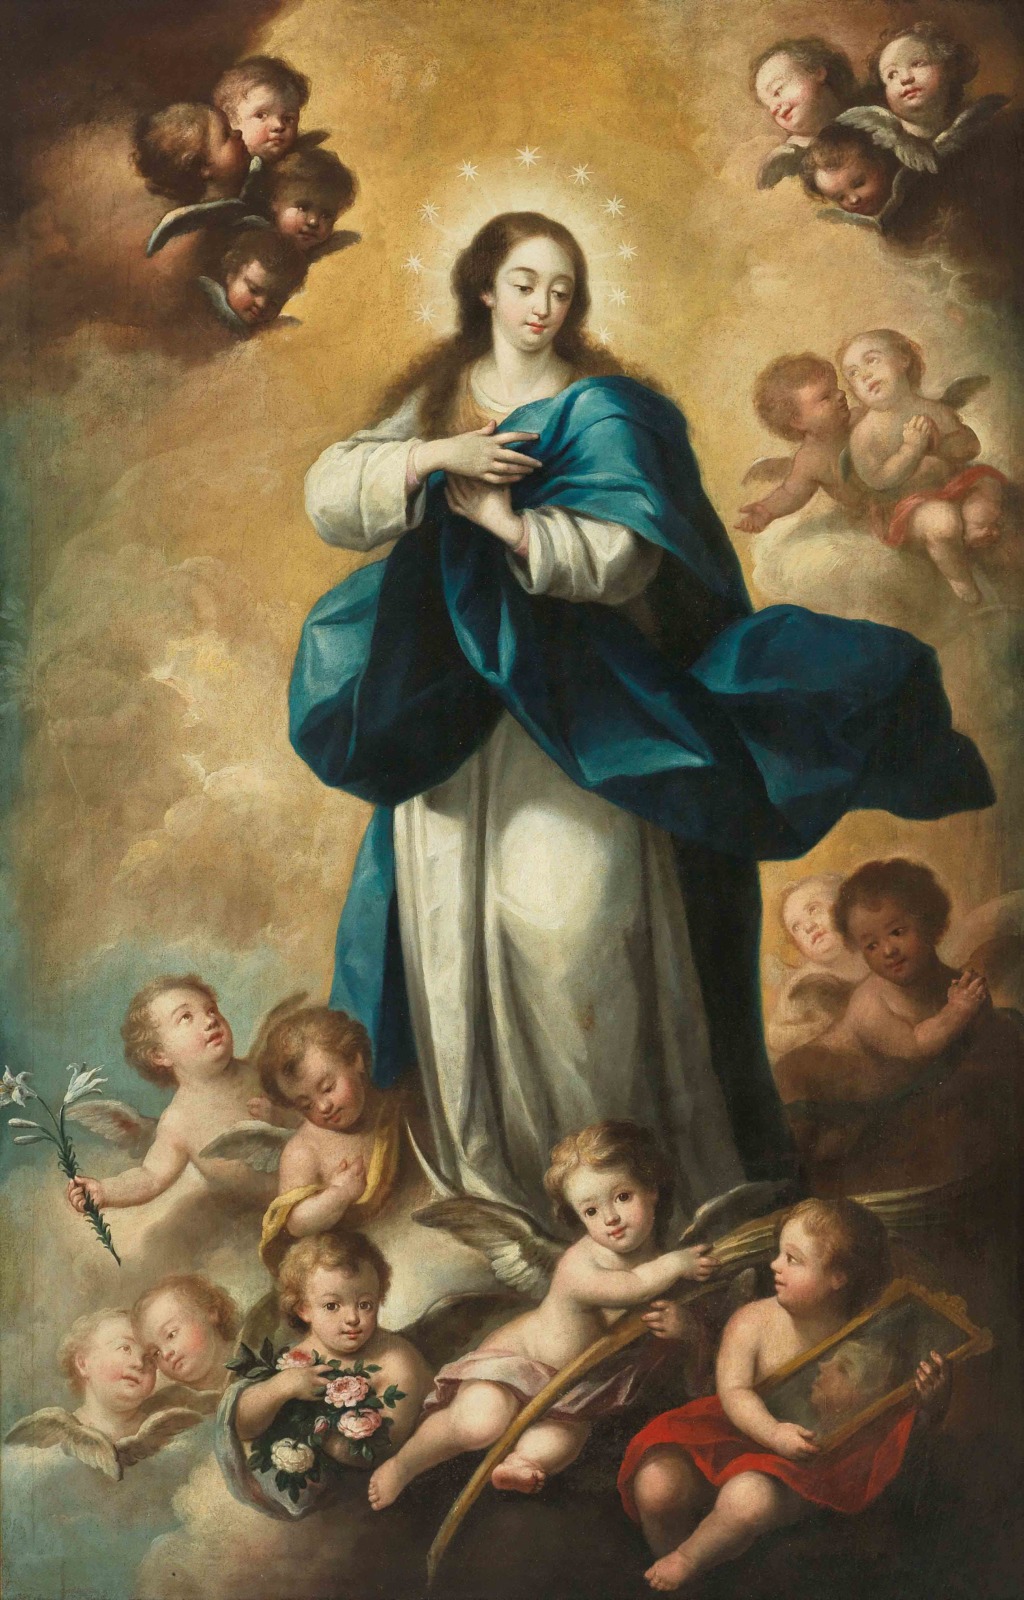 Assumption Day - Andrés de Rubira - The Assumption of the Virgin. Public Domain via Wikimedia Commons